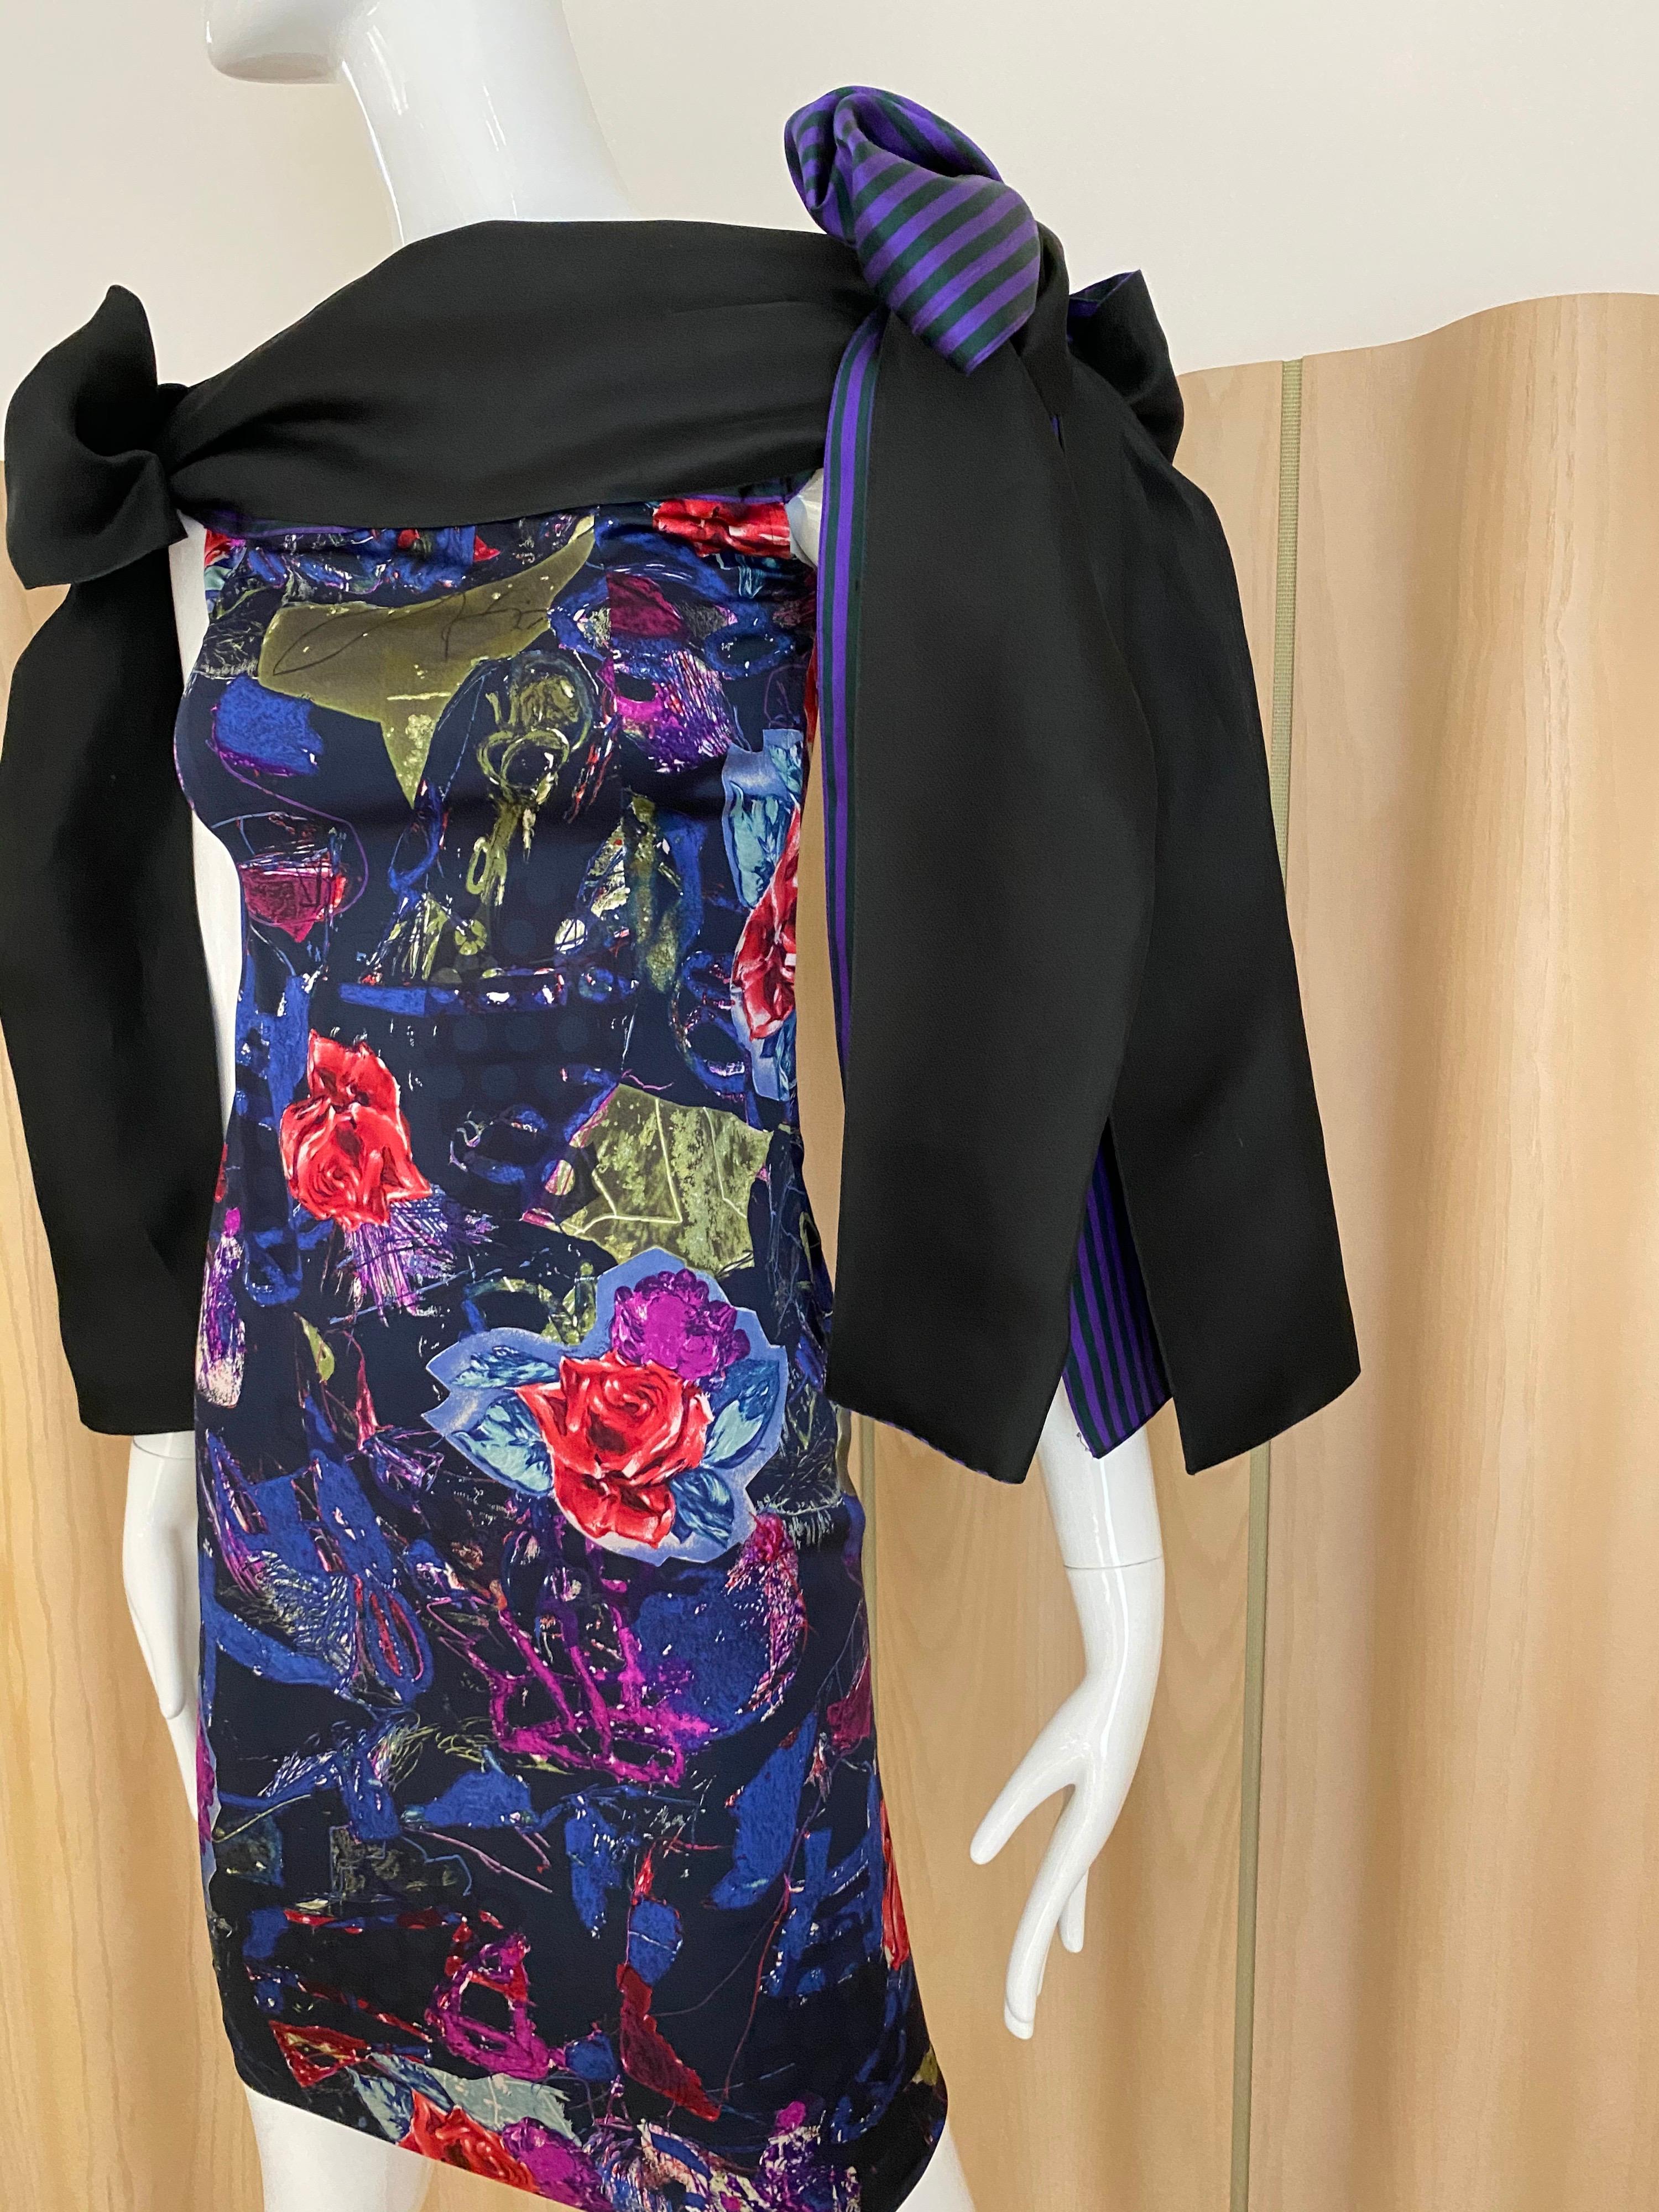 Women's Christian Lacroix Multi Color Print Dress with Bows